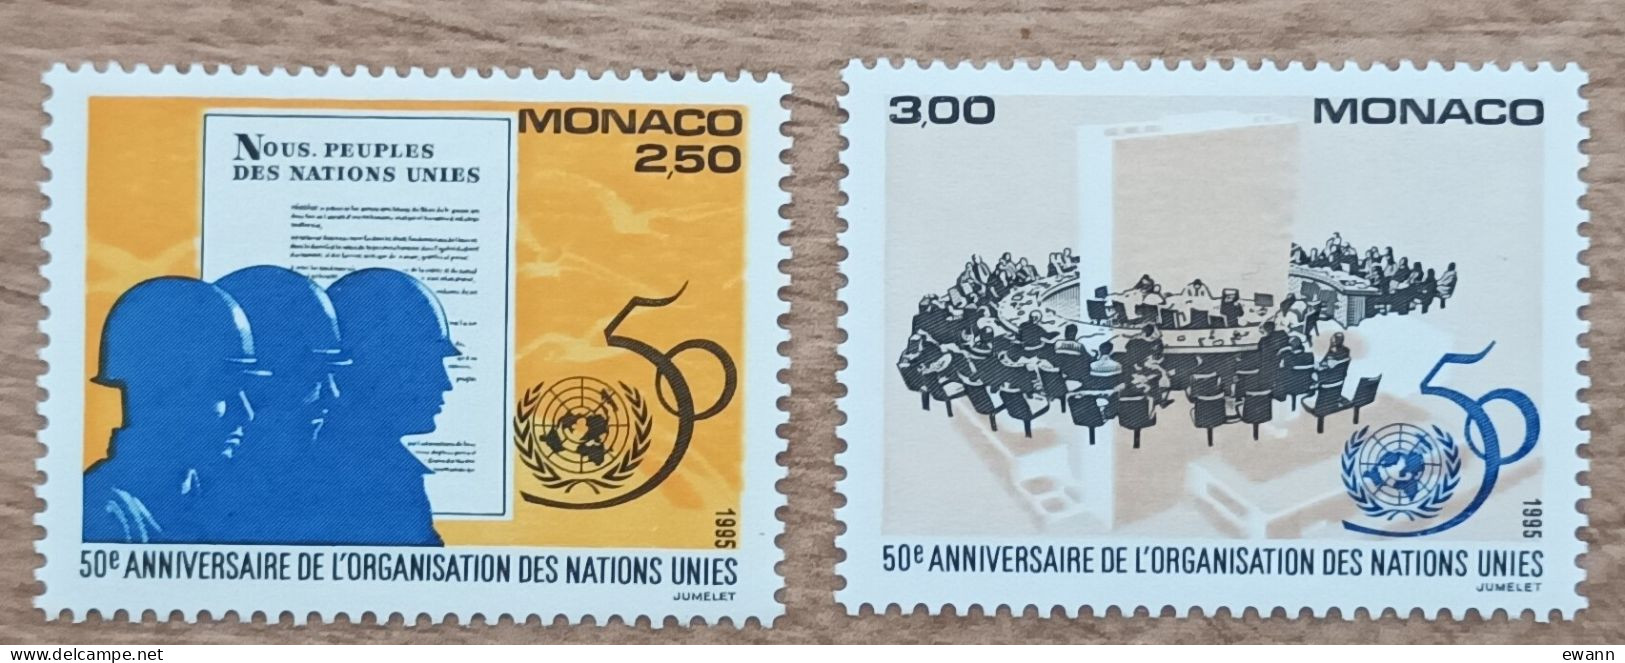 Monaco - YT N°2002, 2003 - 50e Anniversaire De L'Organisation Des Nations Unies / ONU - 1995 - Neuf - Ongebruikt